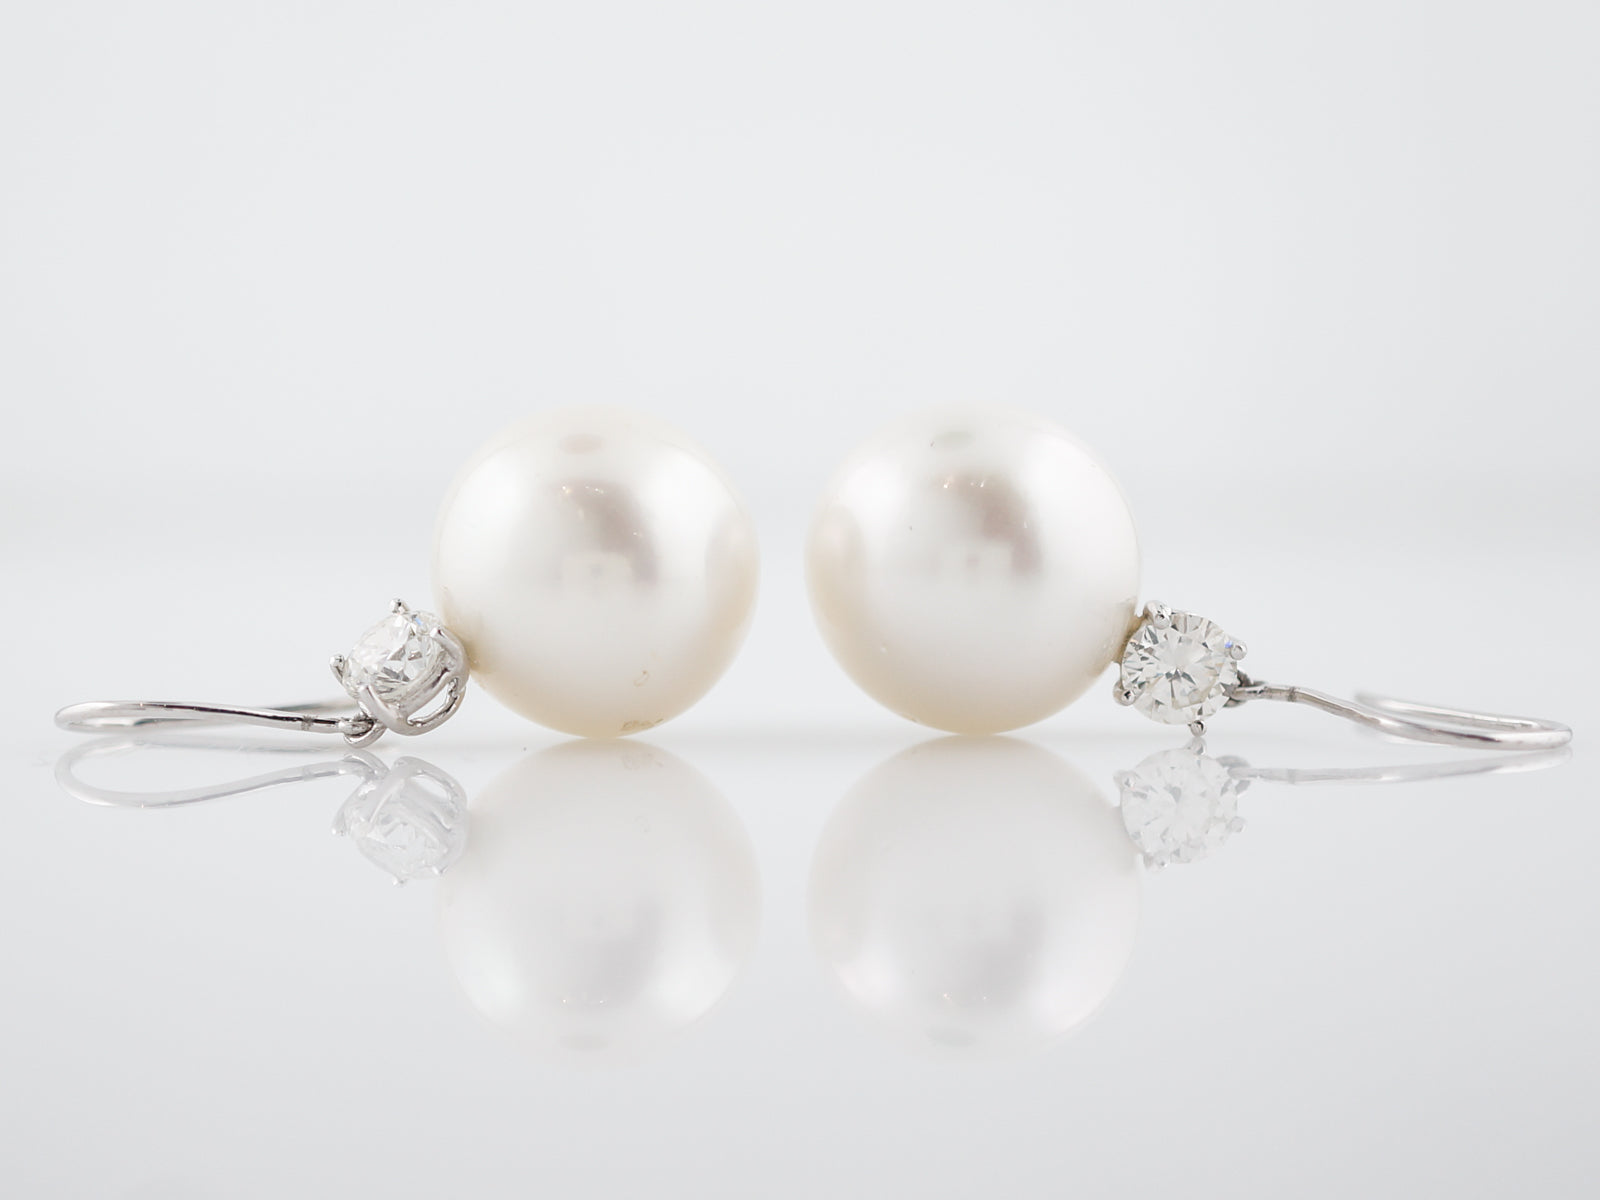 Pearl Earrings Modern 1.18 Round Brilliant Cut Diamond in Platinum